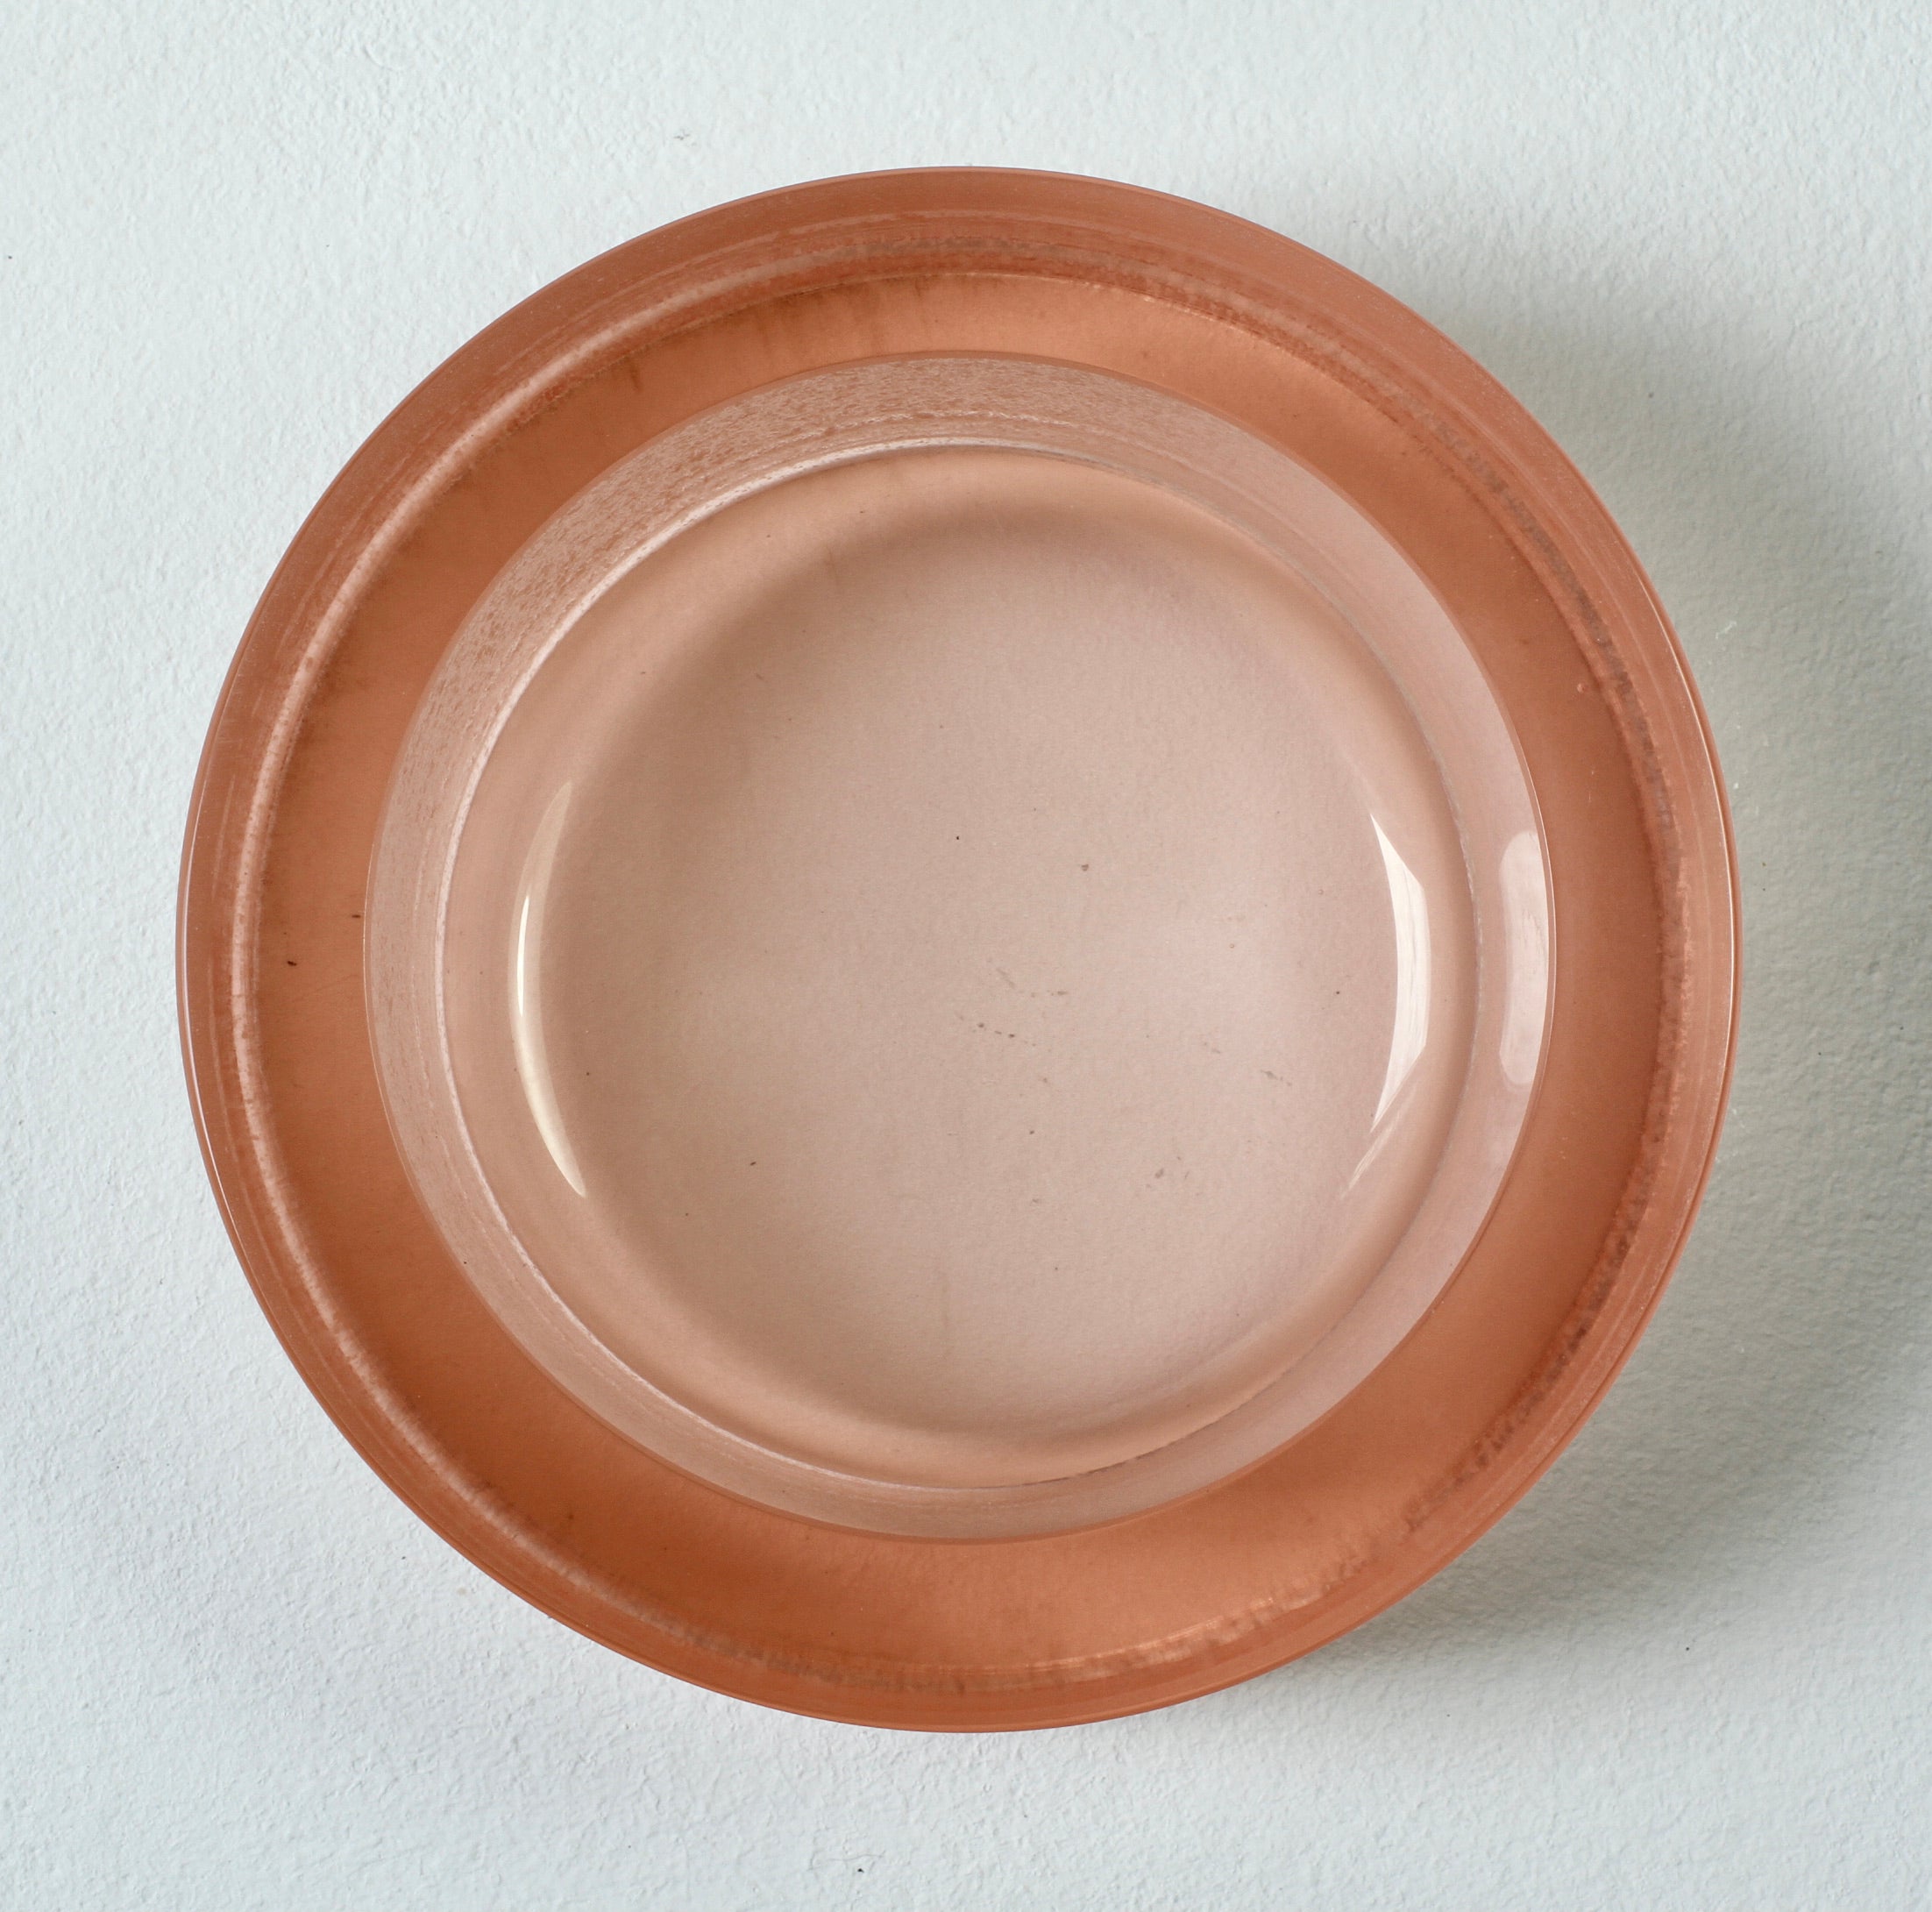 Impresionante cuenco, plato o cenicero circular redondo de cristal blanco/color rosa suave 